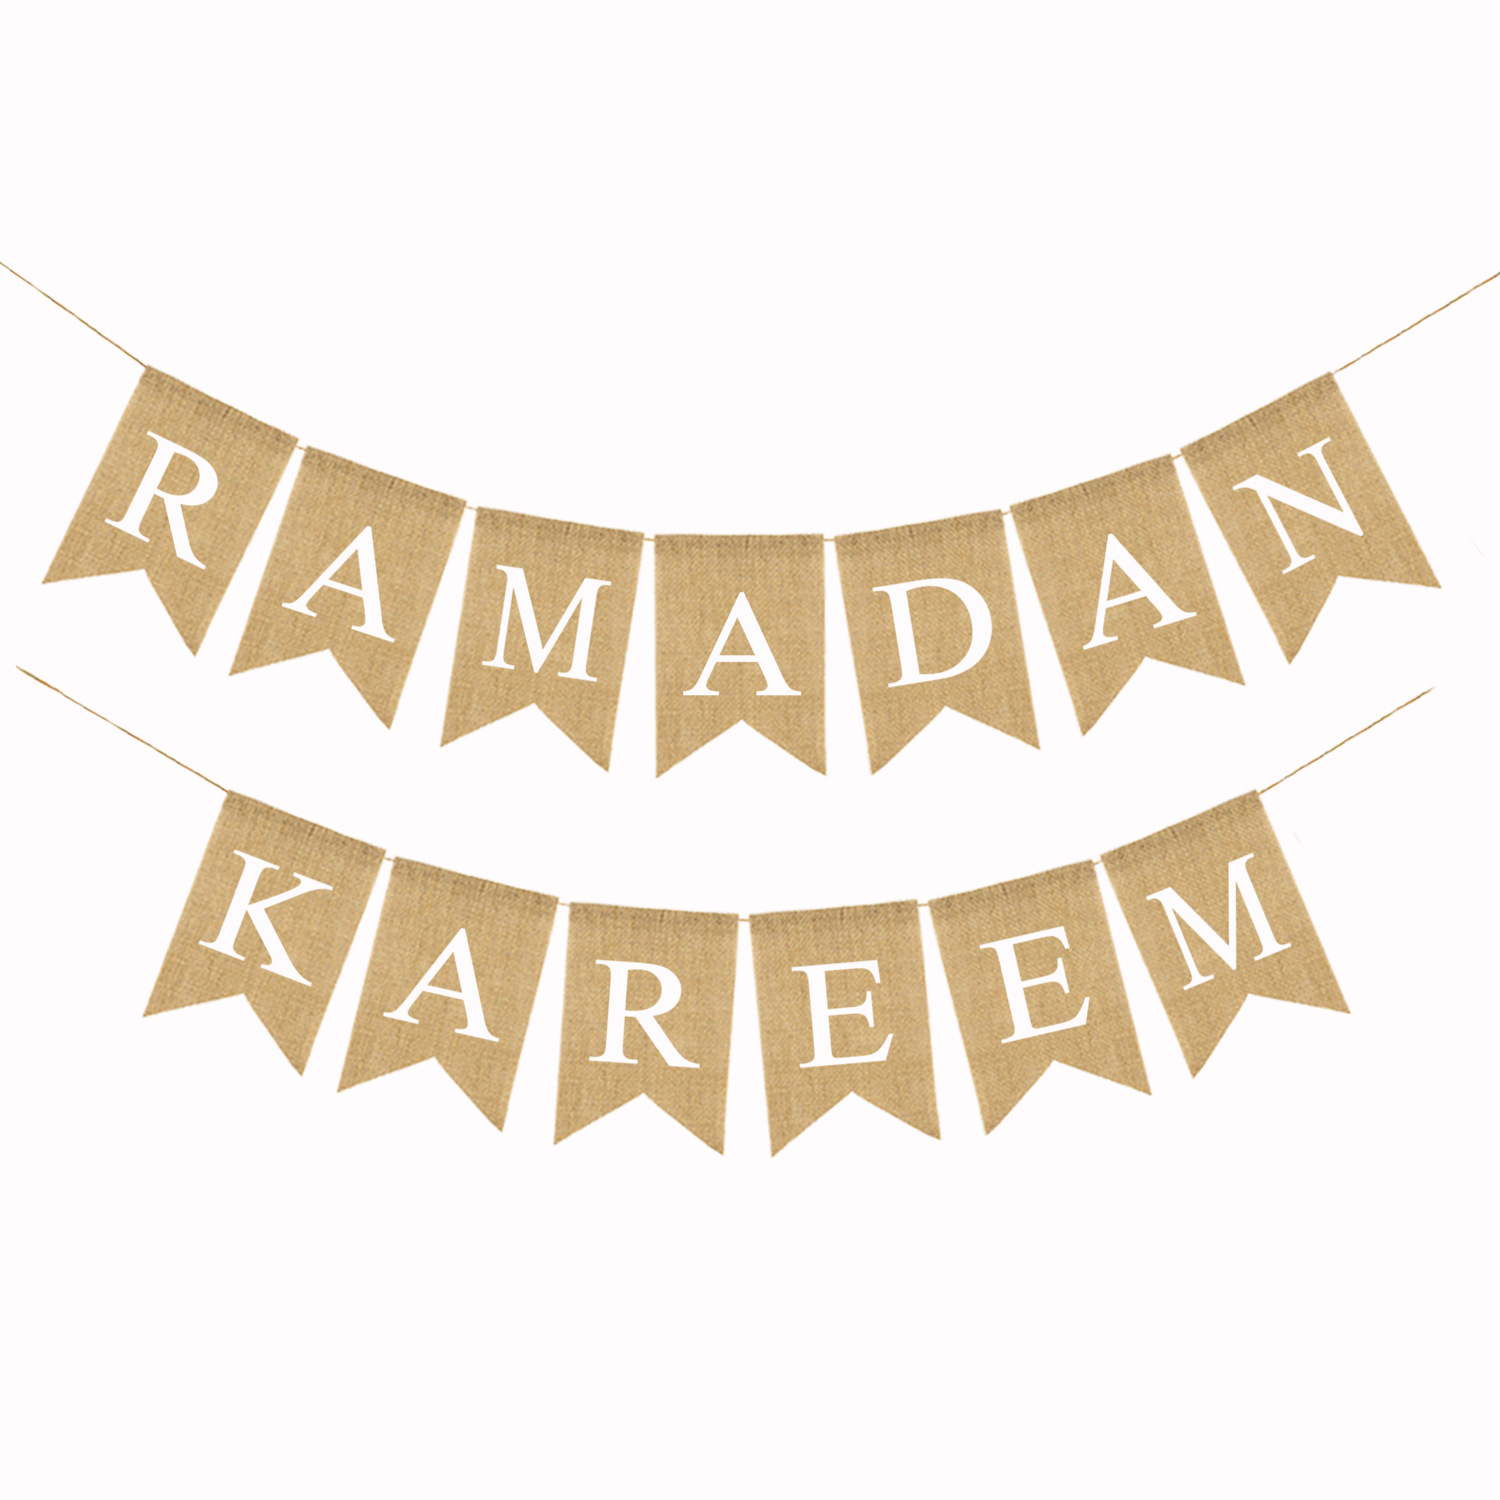 holiday supplies muslim decoration garland hanging flag ramadan kareem burlap swallowtail flag